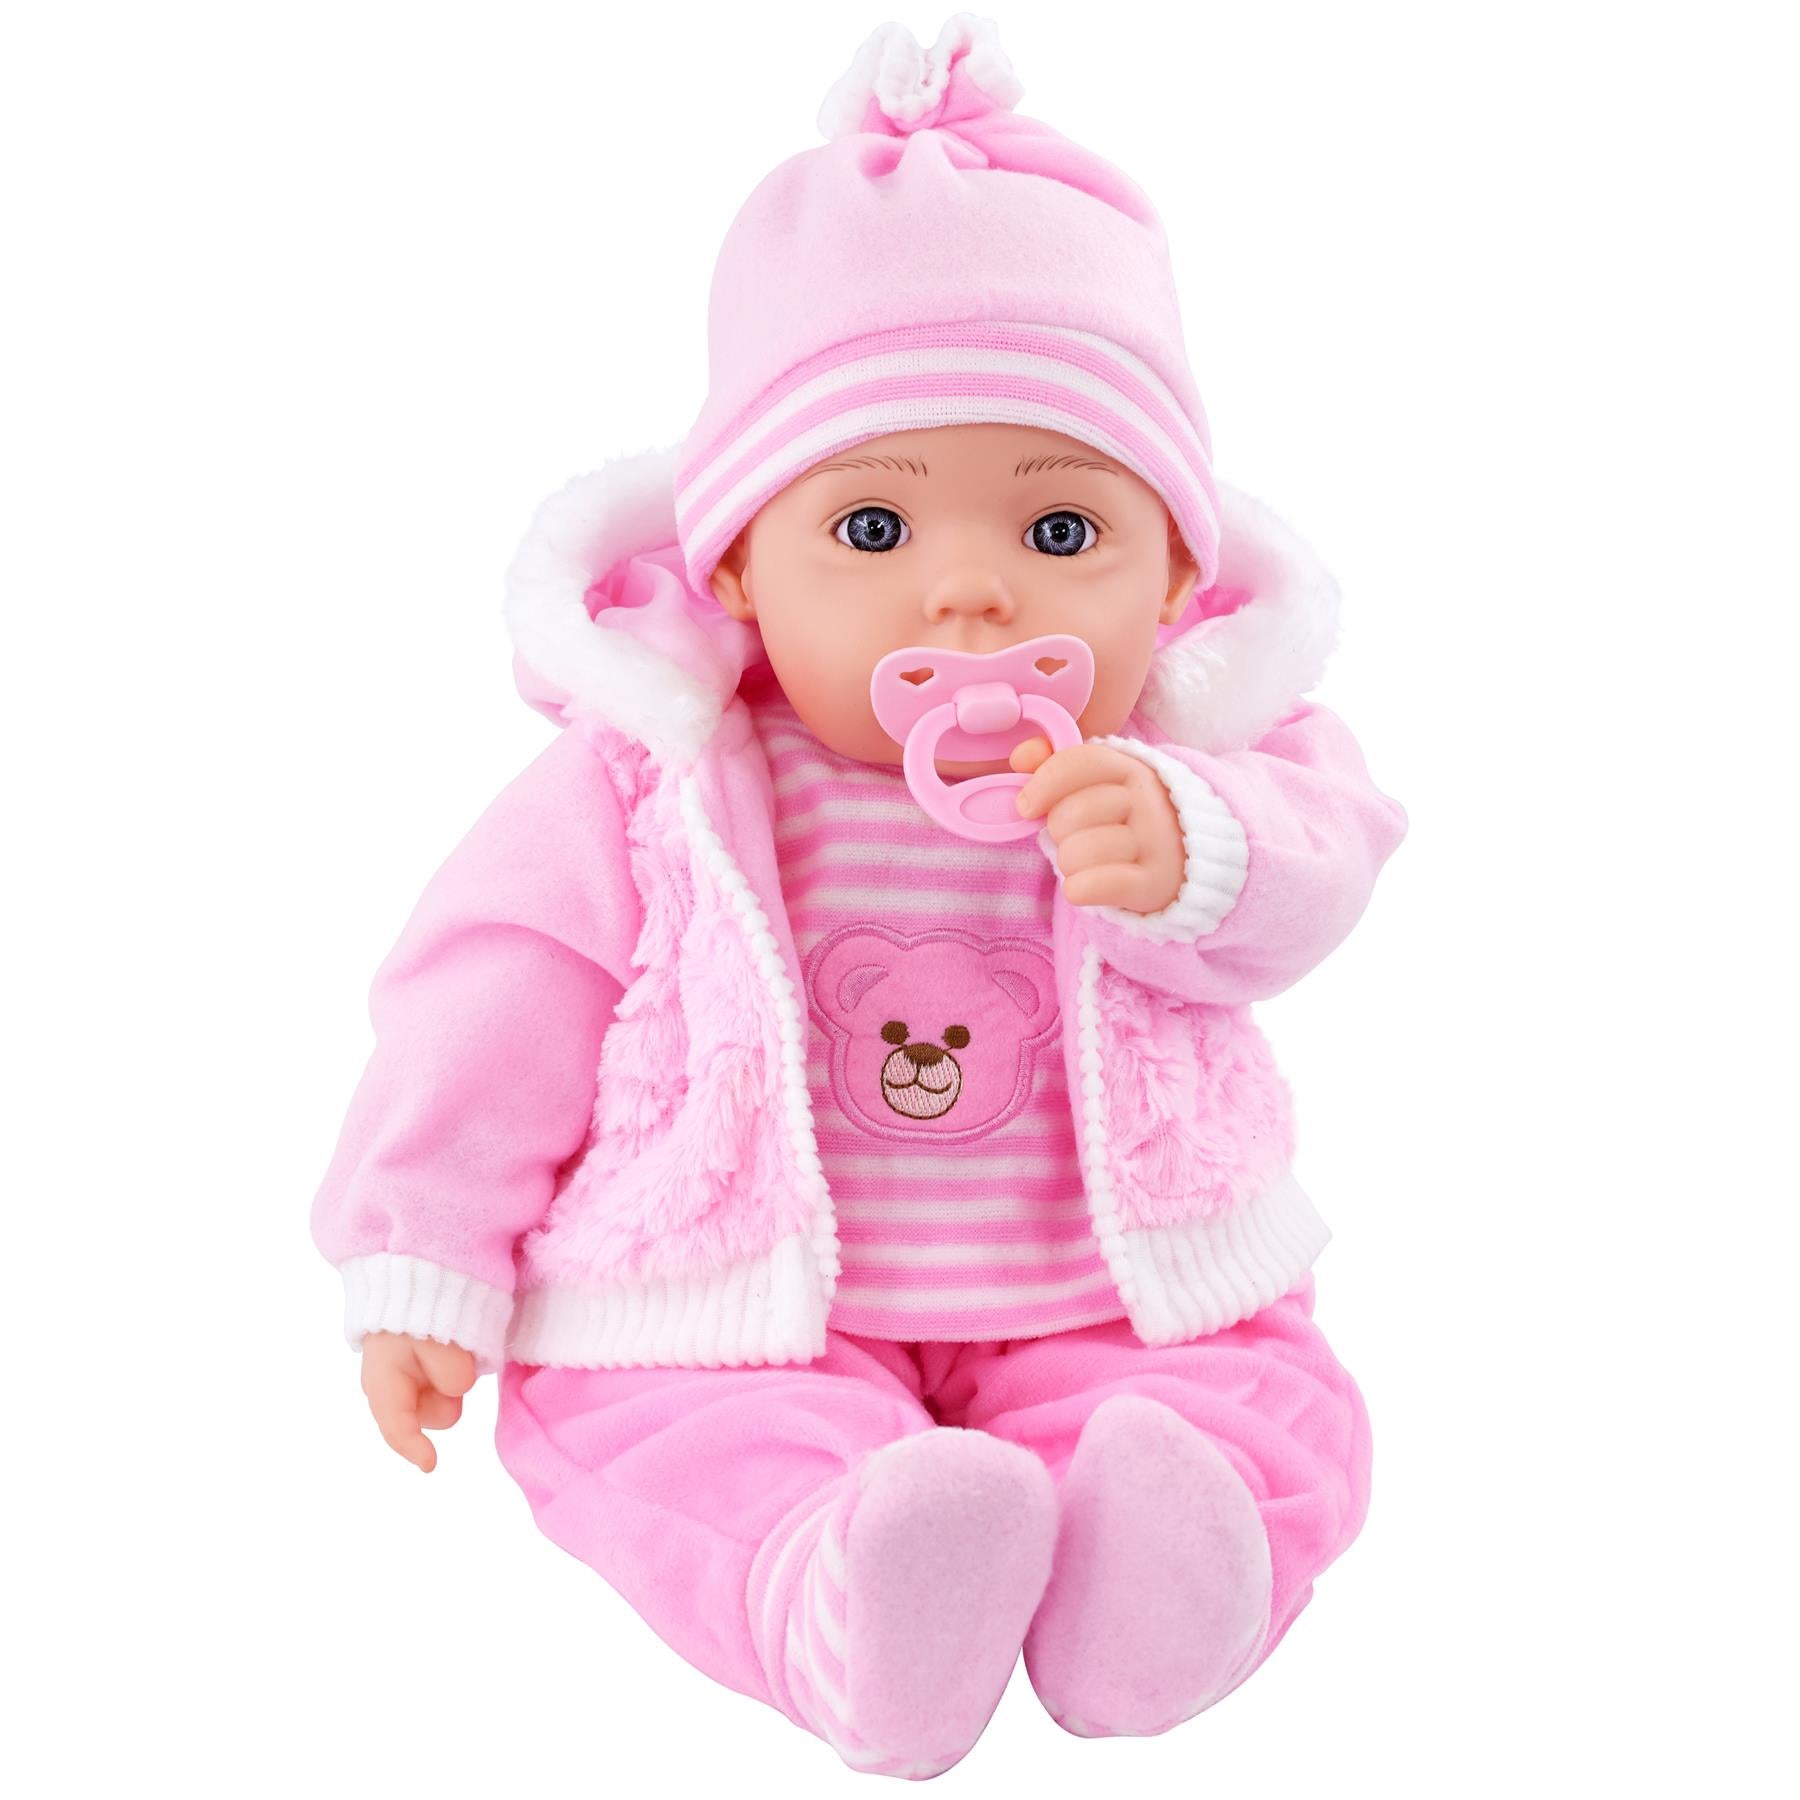 Baby Pink Bibi Baby Doll Toy With Dummy & Sounds by BiBi Doll - UKBuyZone